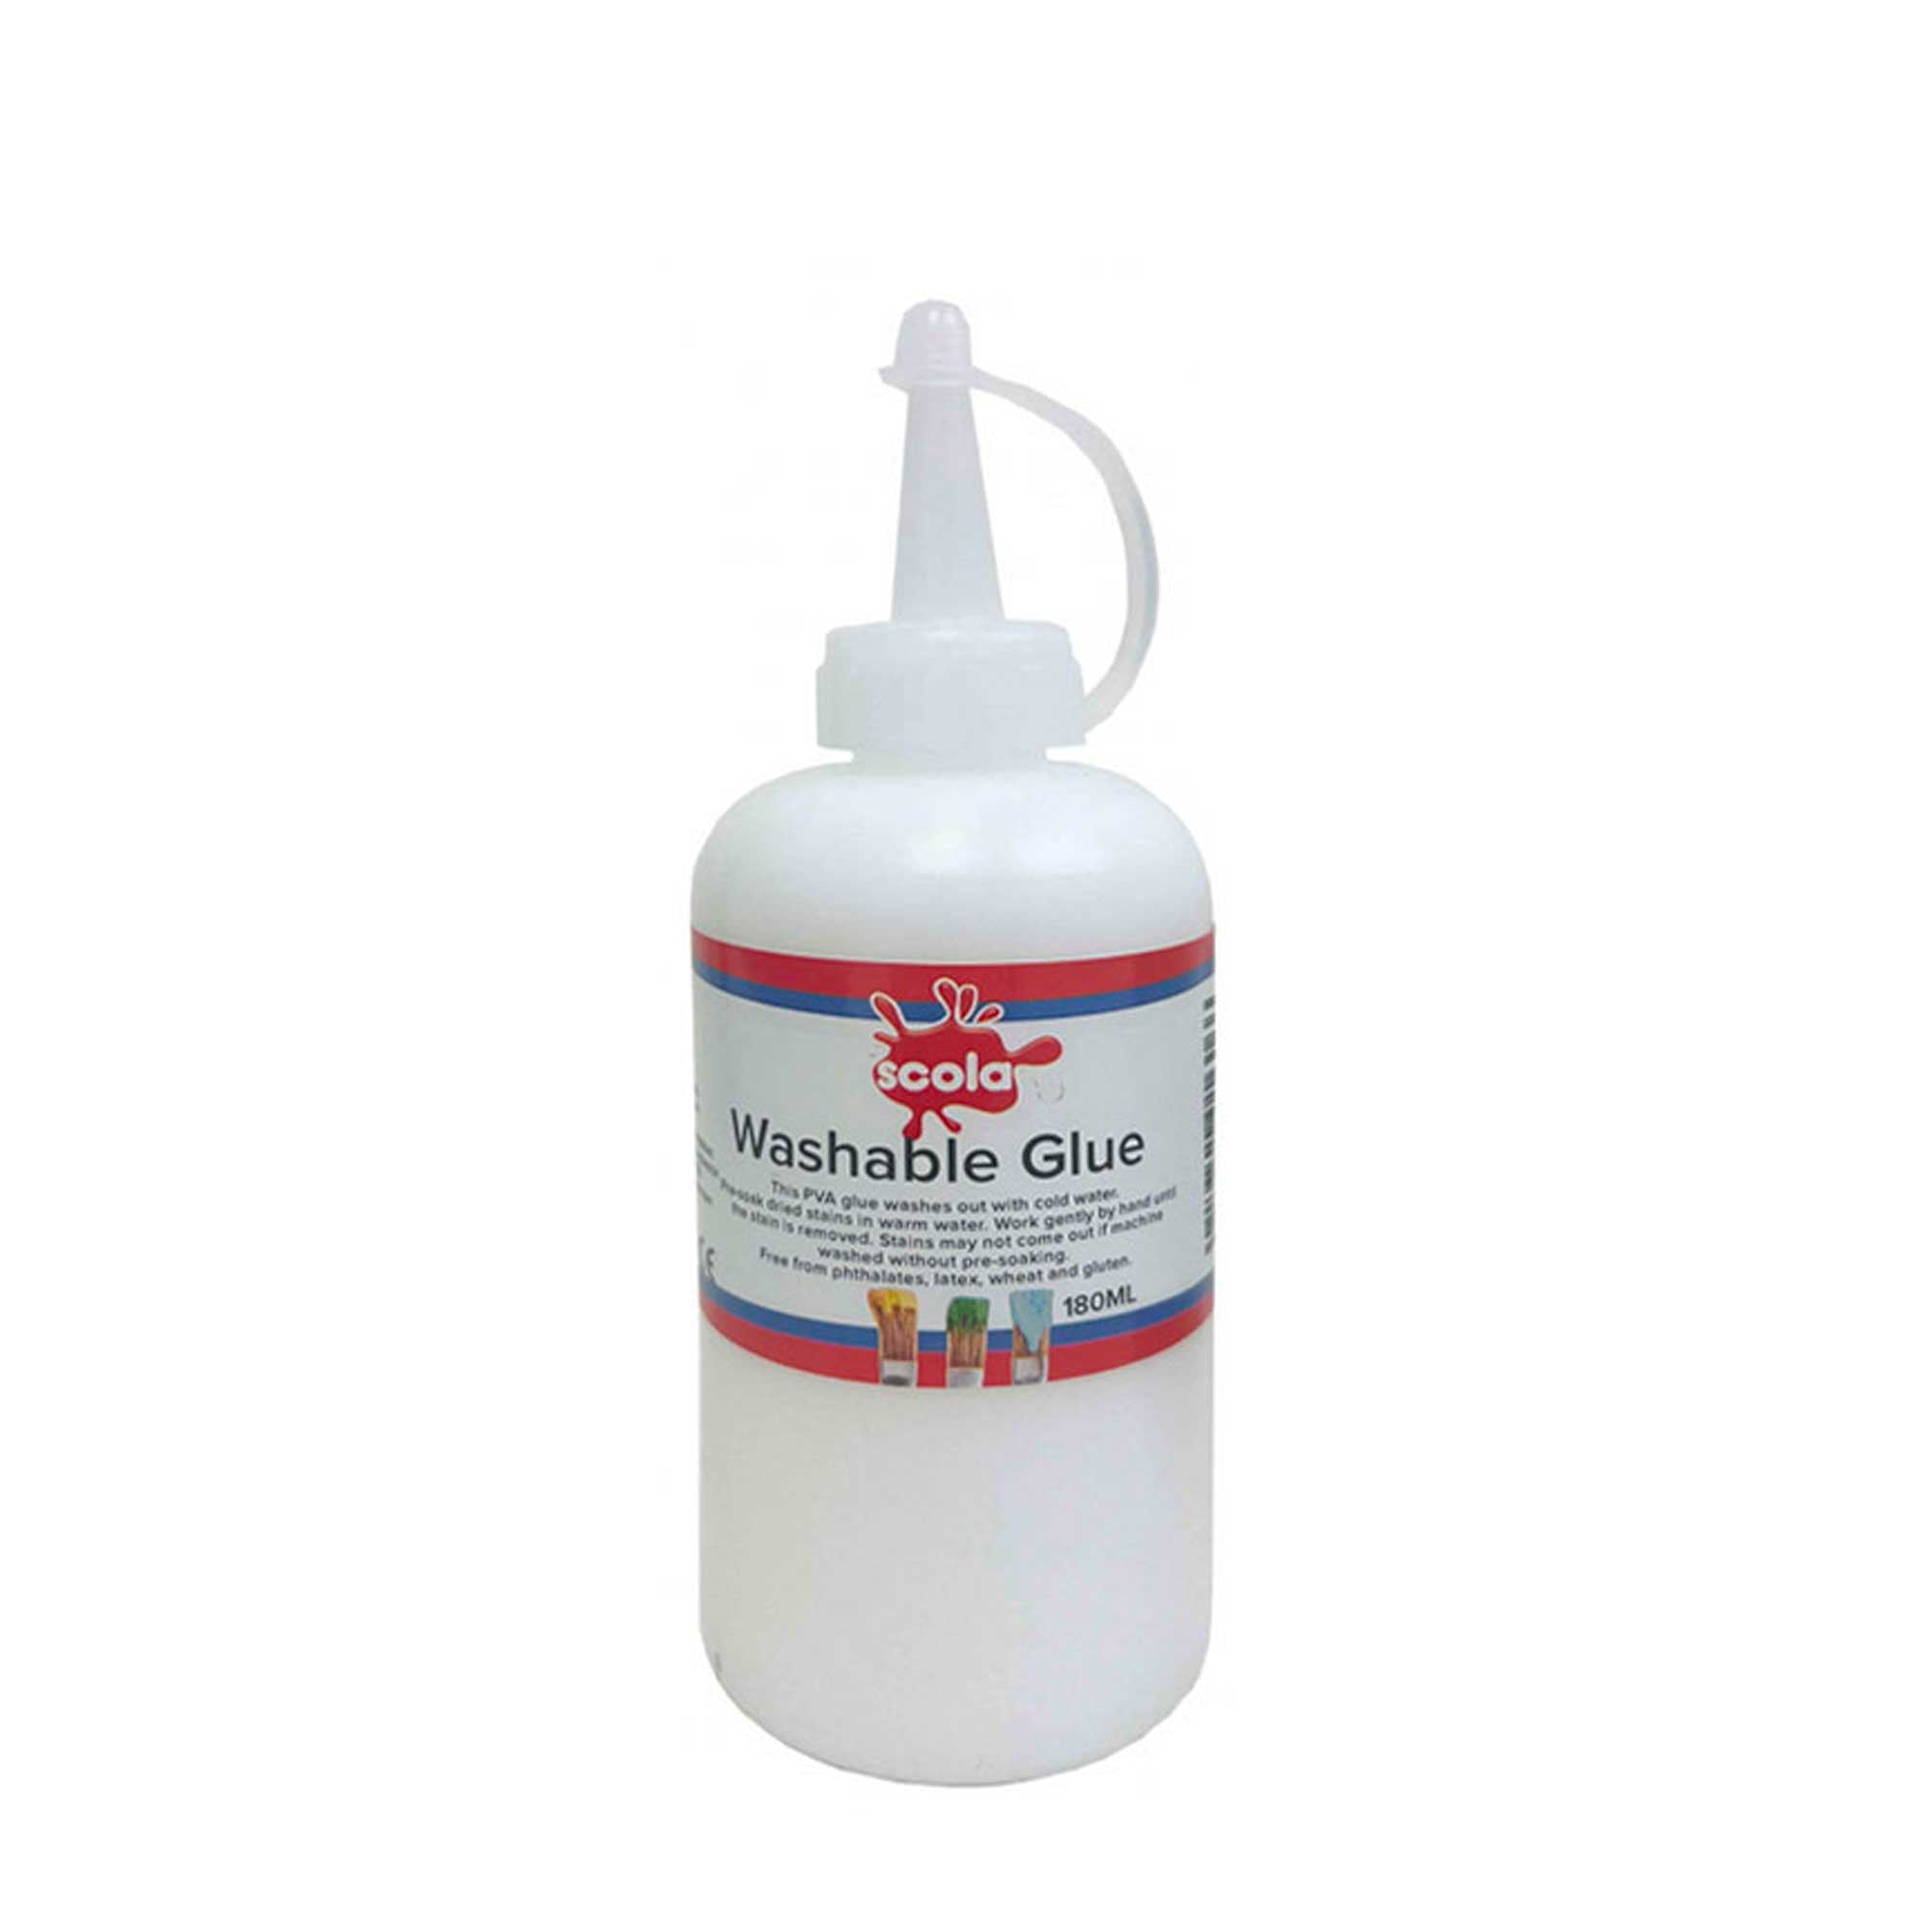 Scola Washable Glue - PVA